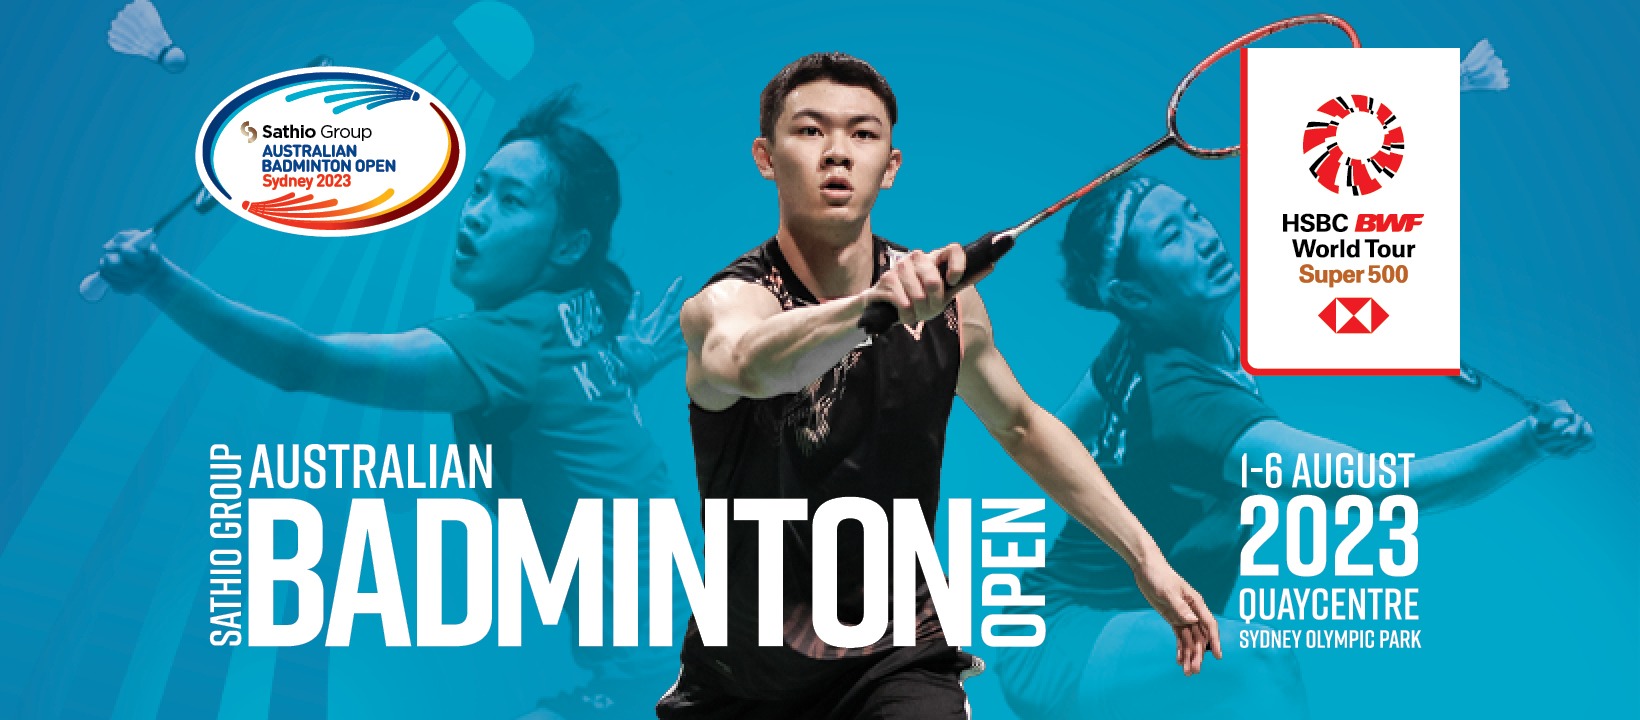 SATHIO GROUP Australian Badminton Open 2023 Tickets, Quaycentre at